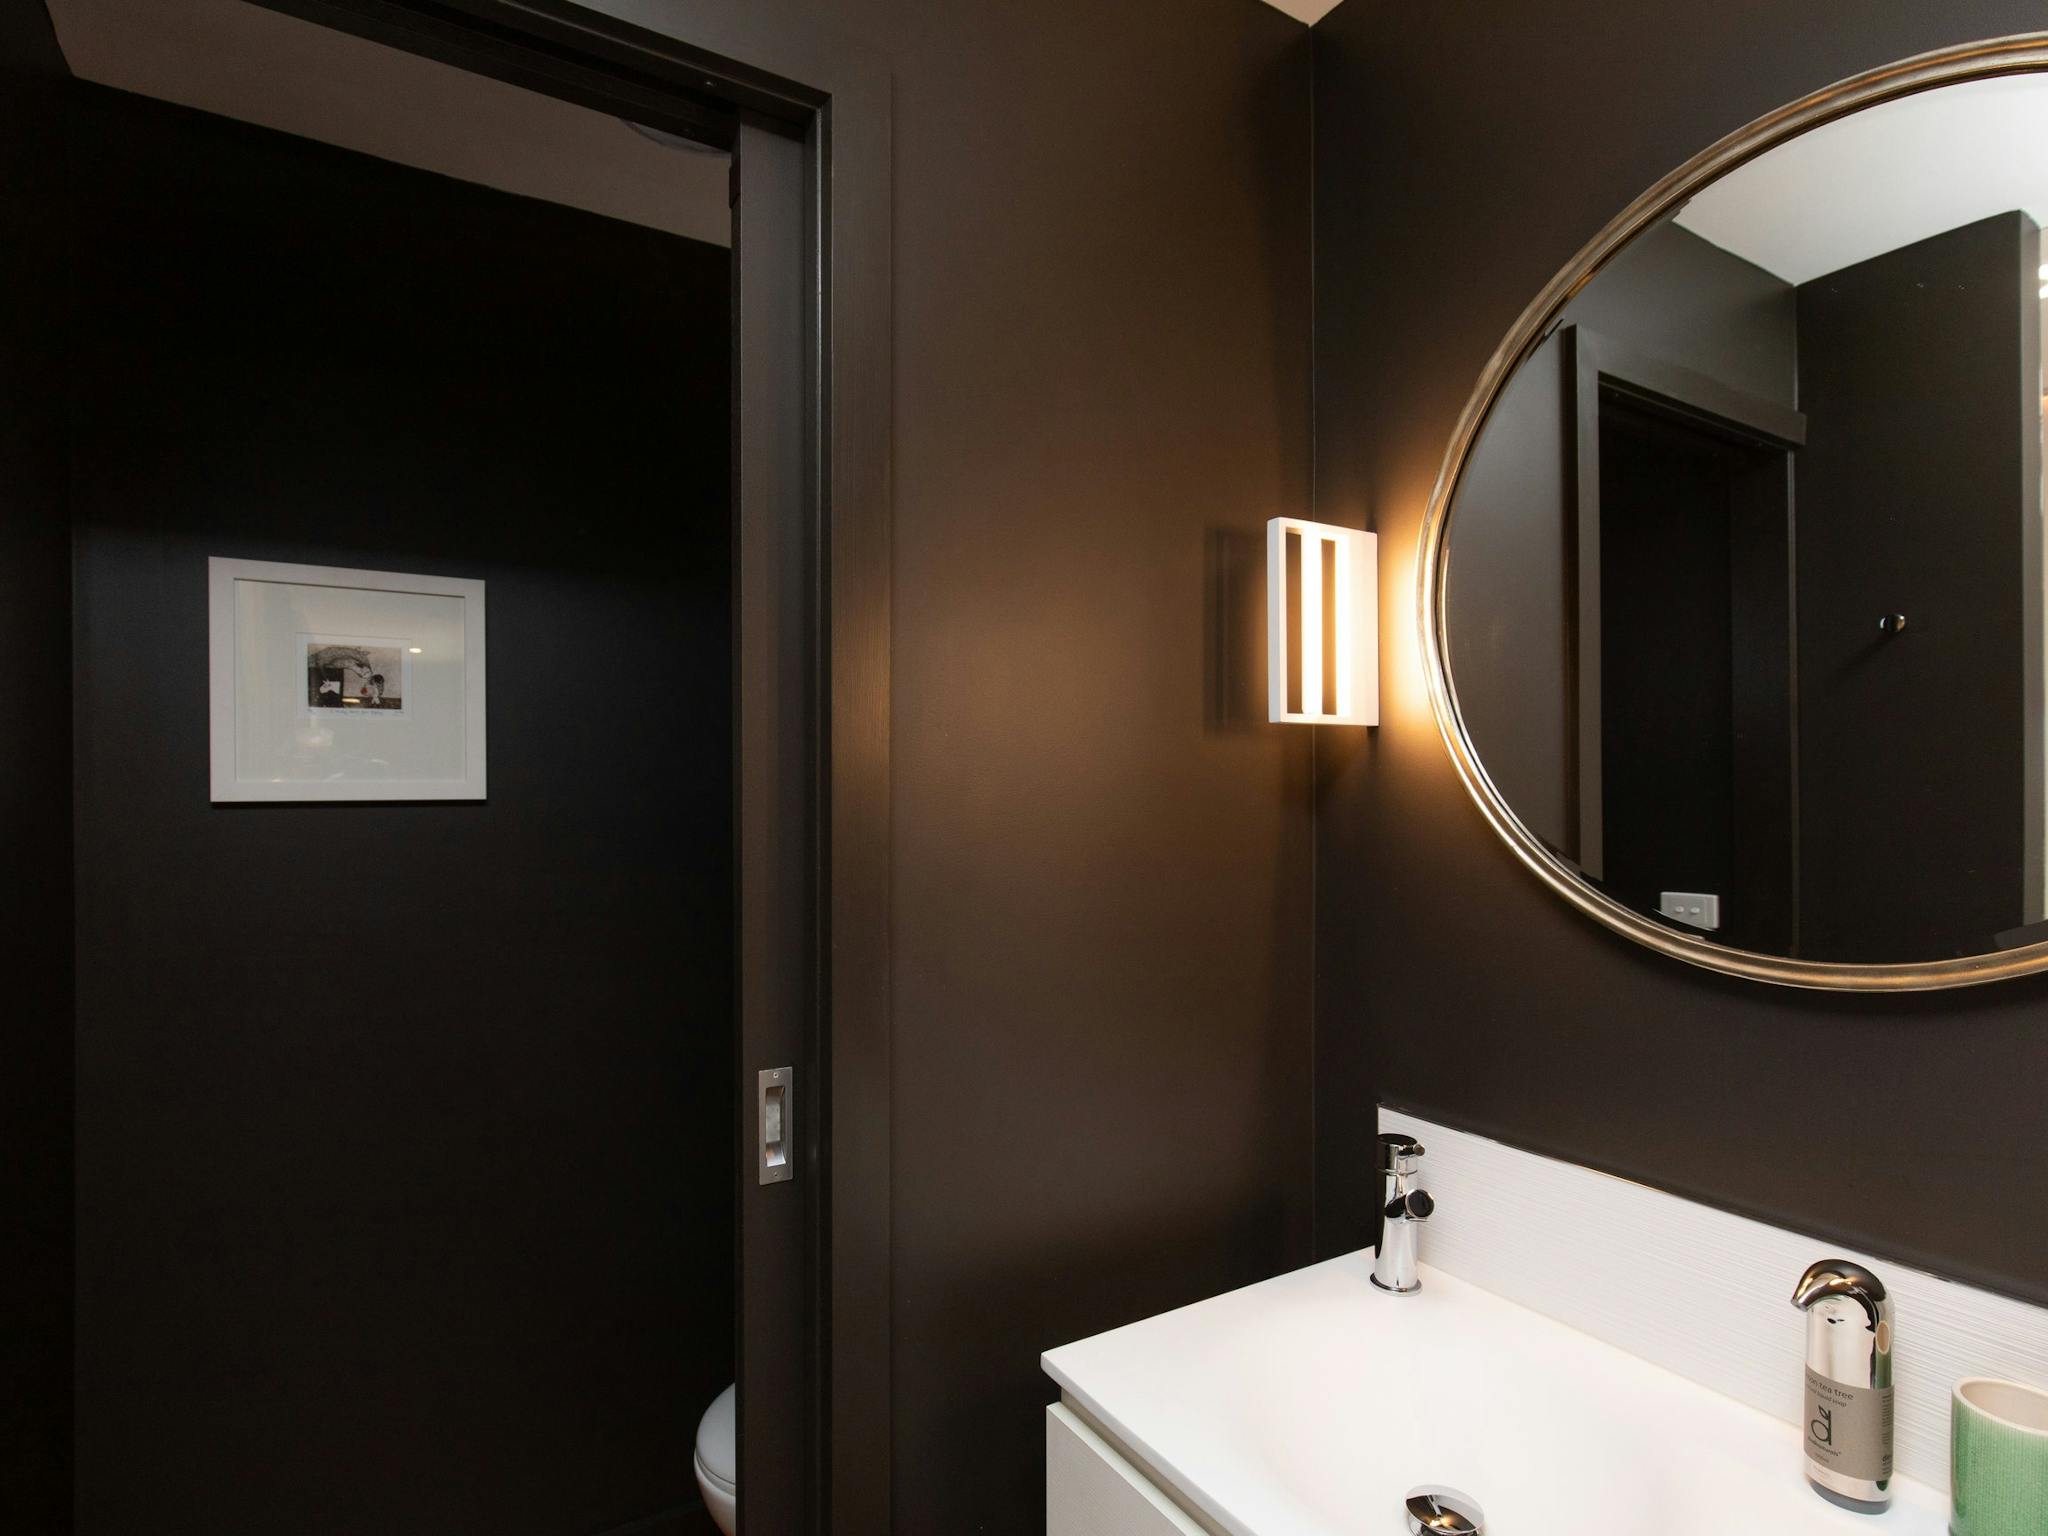 Luxurious bathrooms await you.